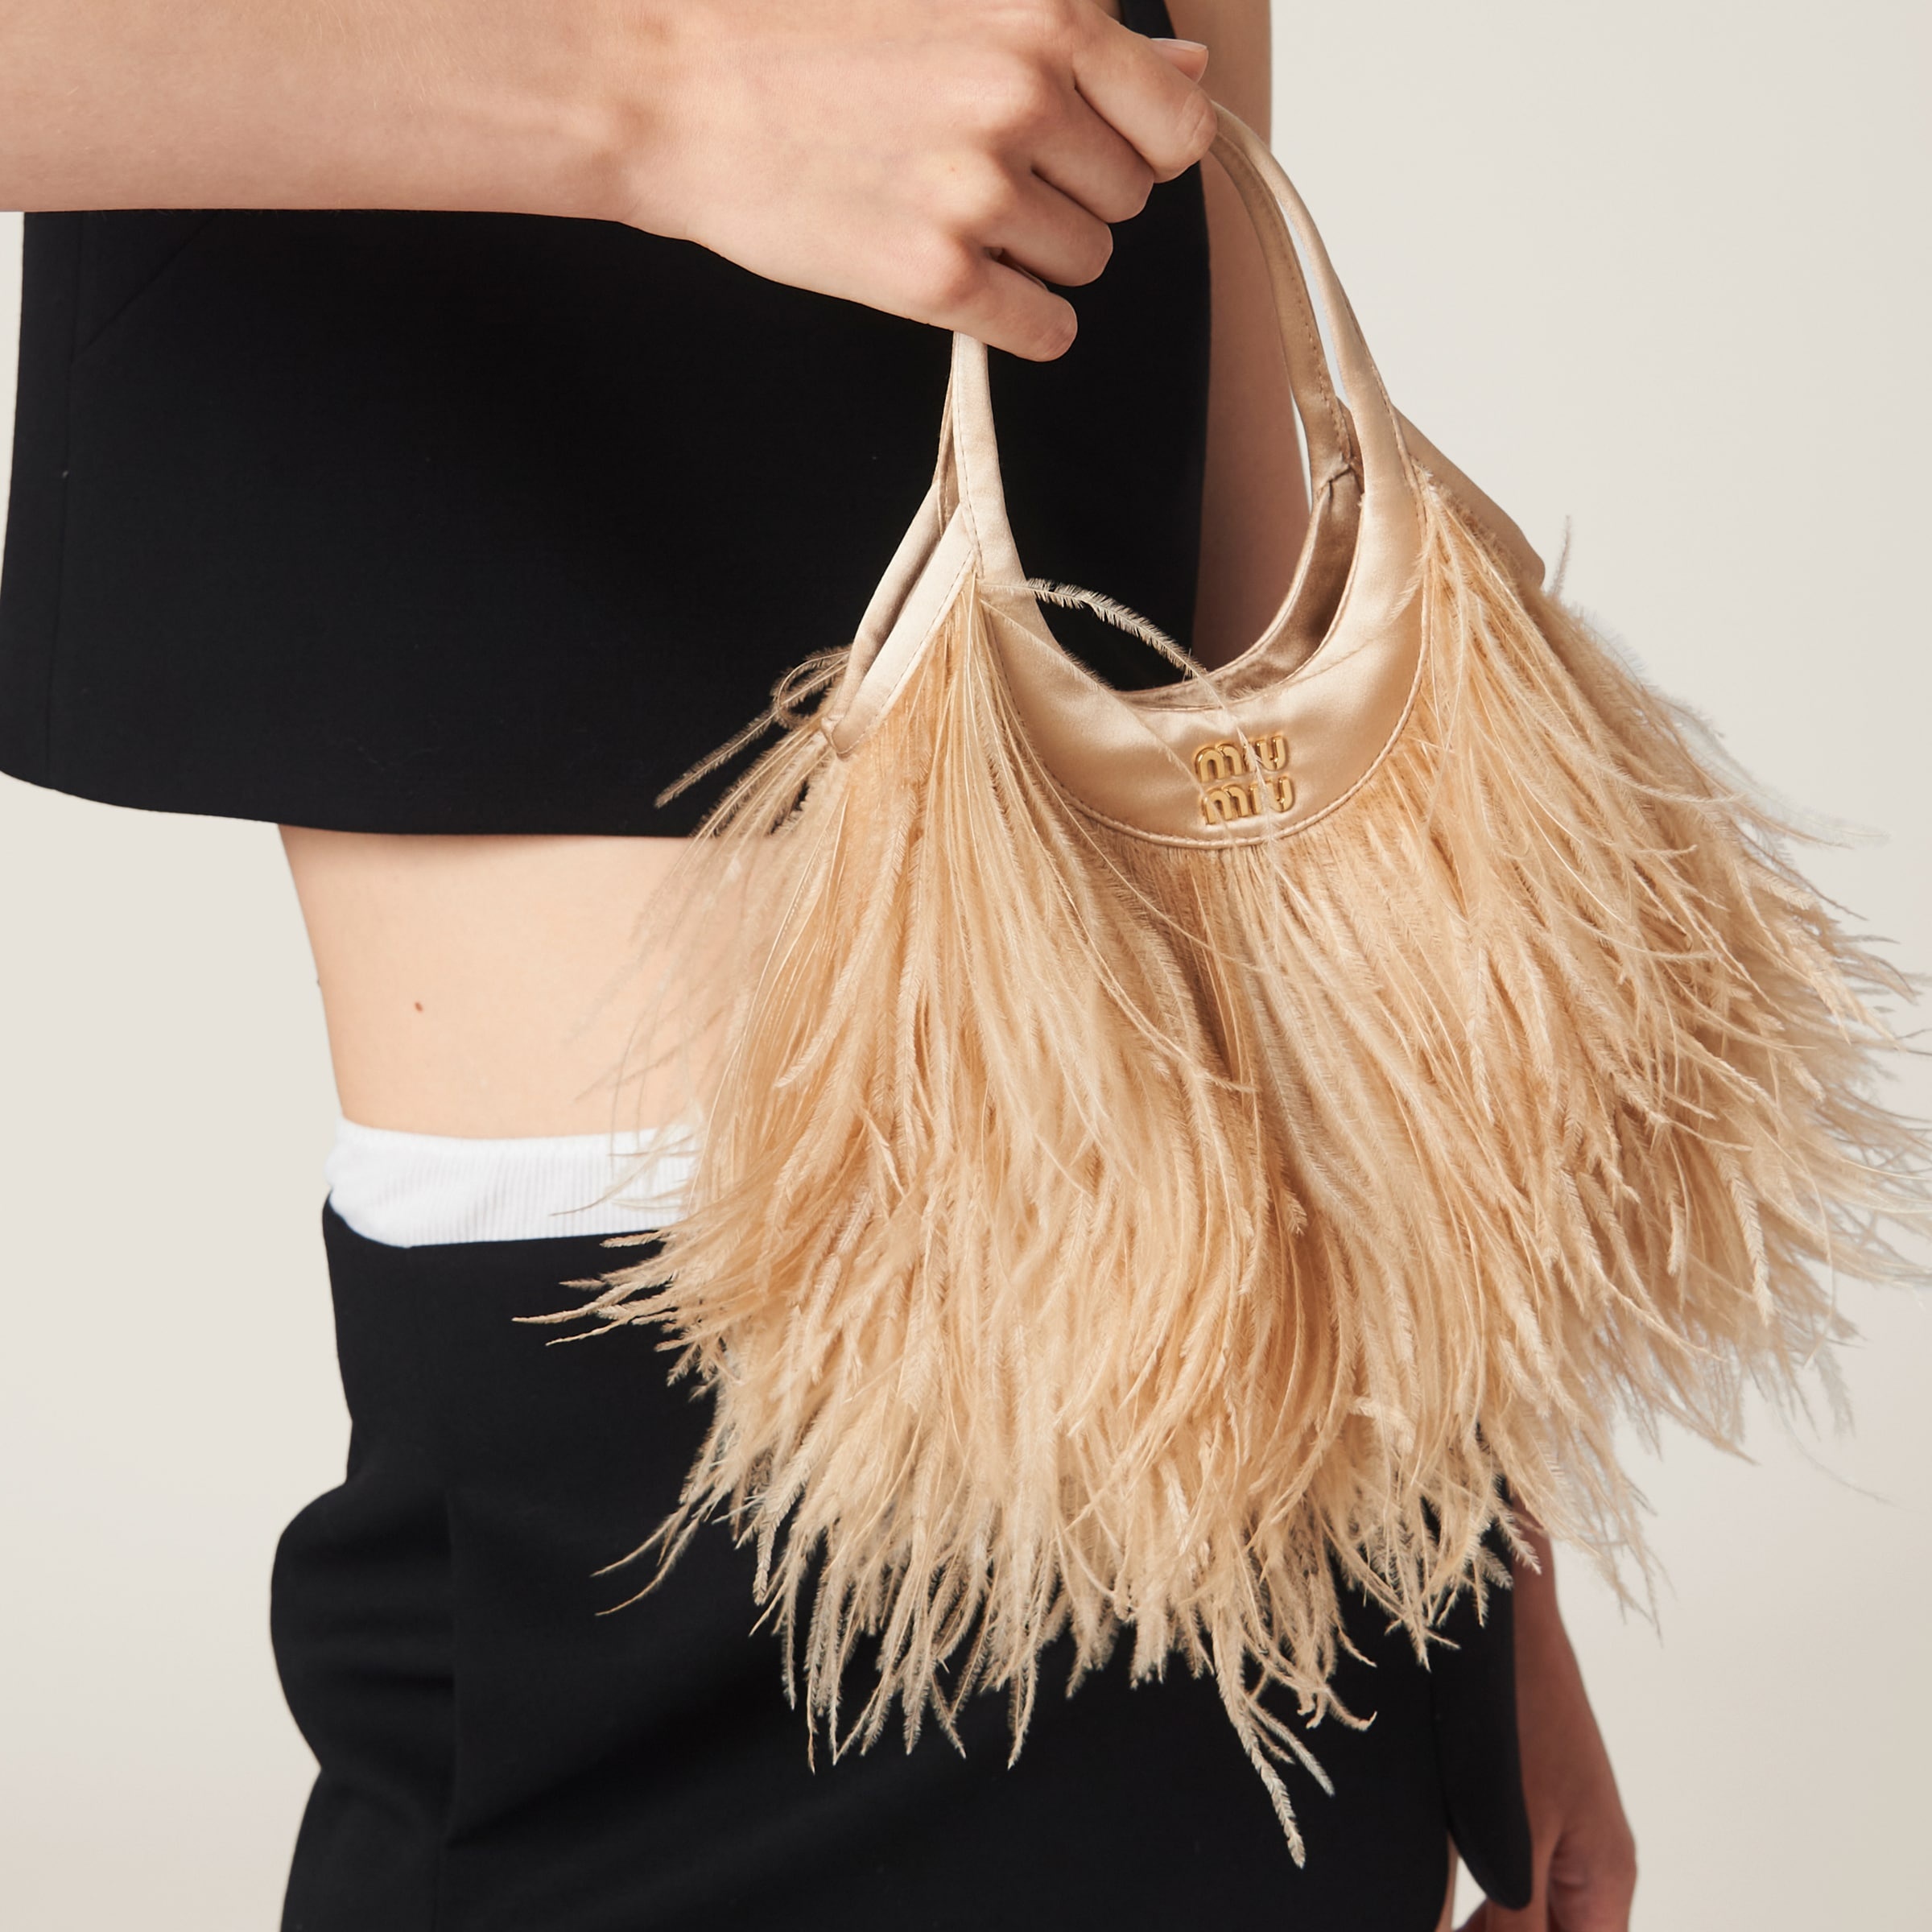 Satin handbag with feathers - 4